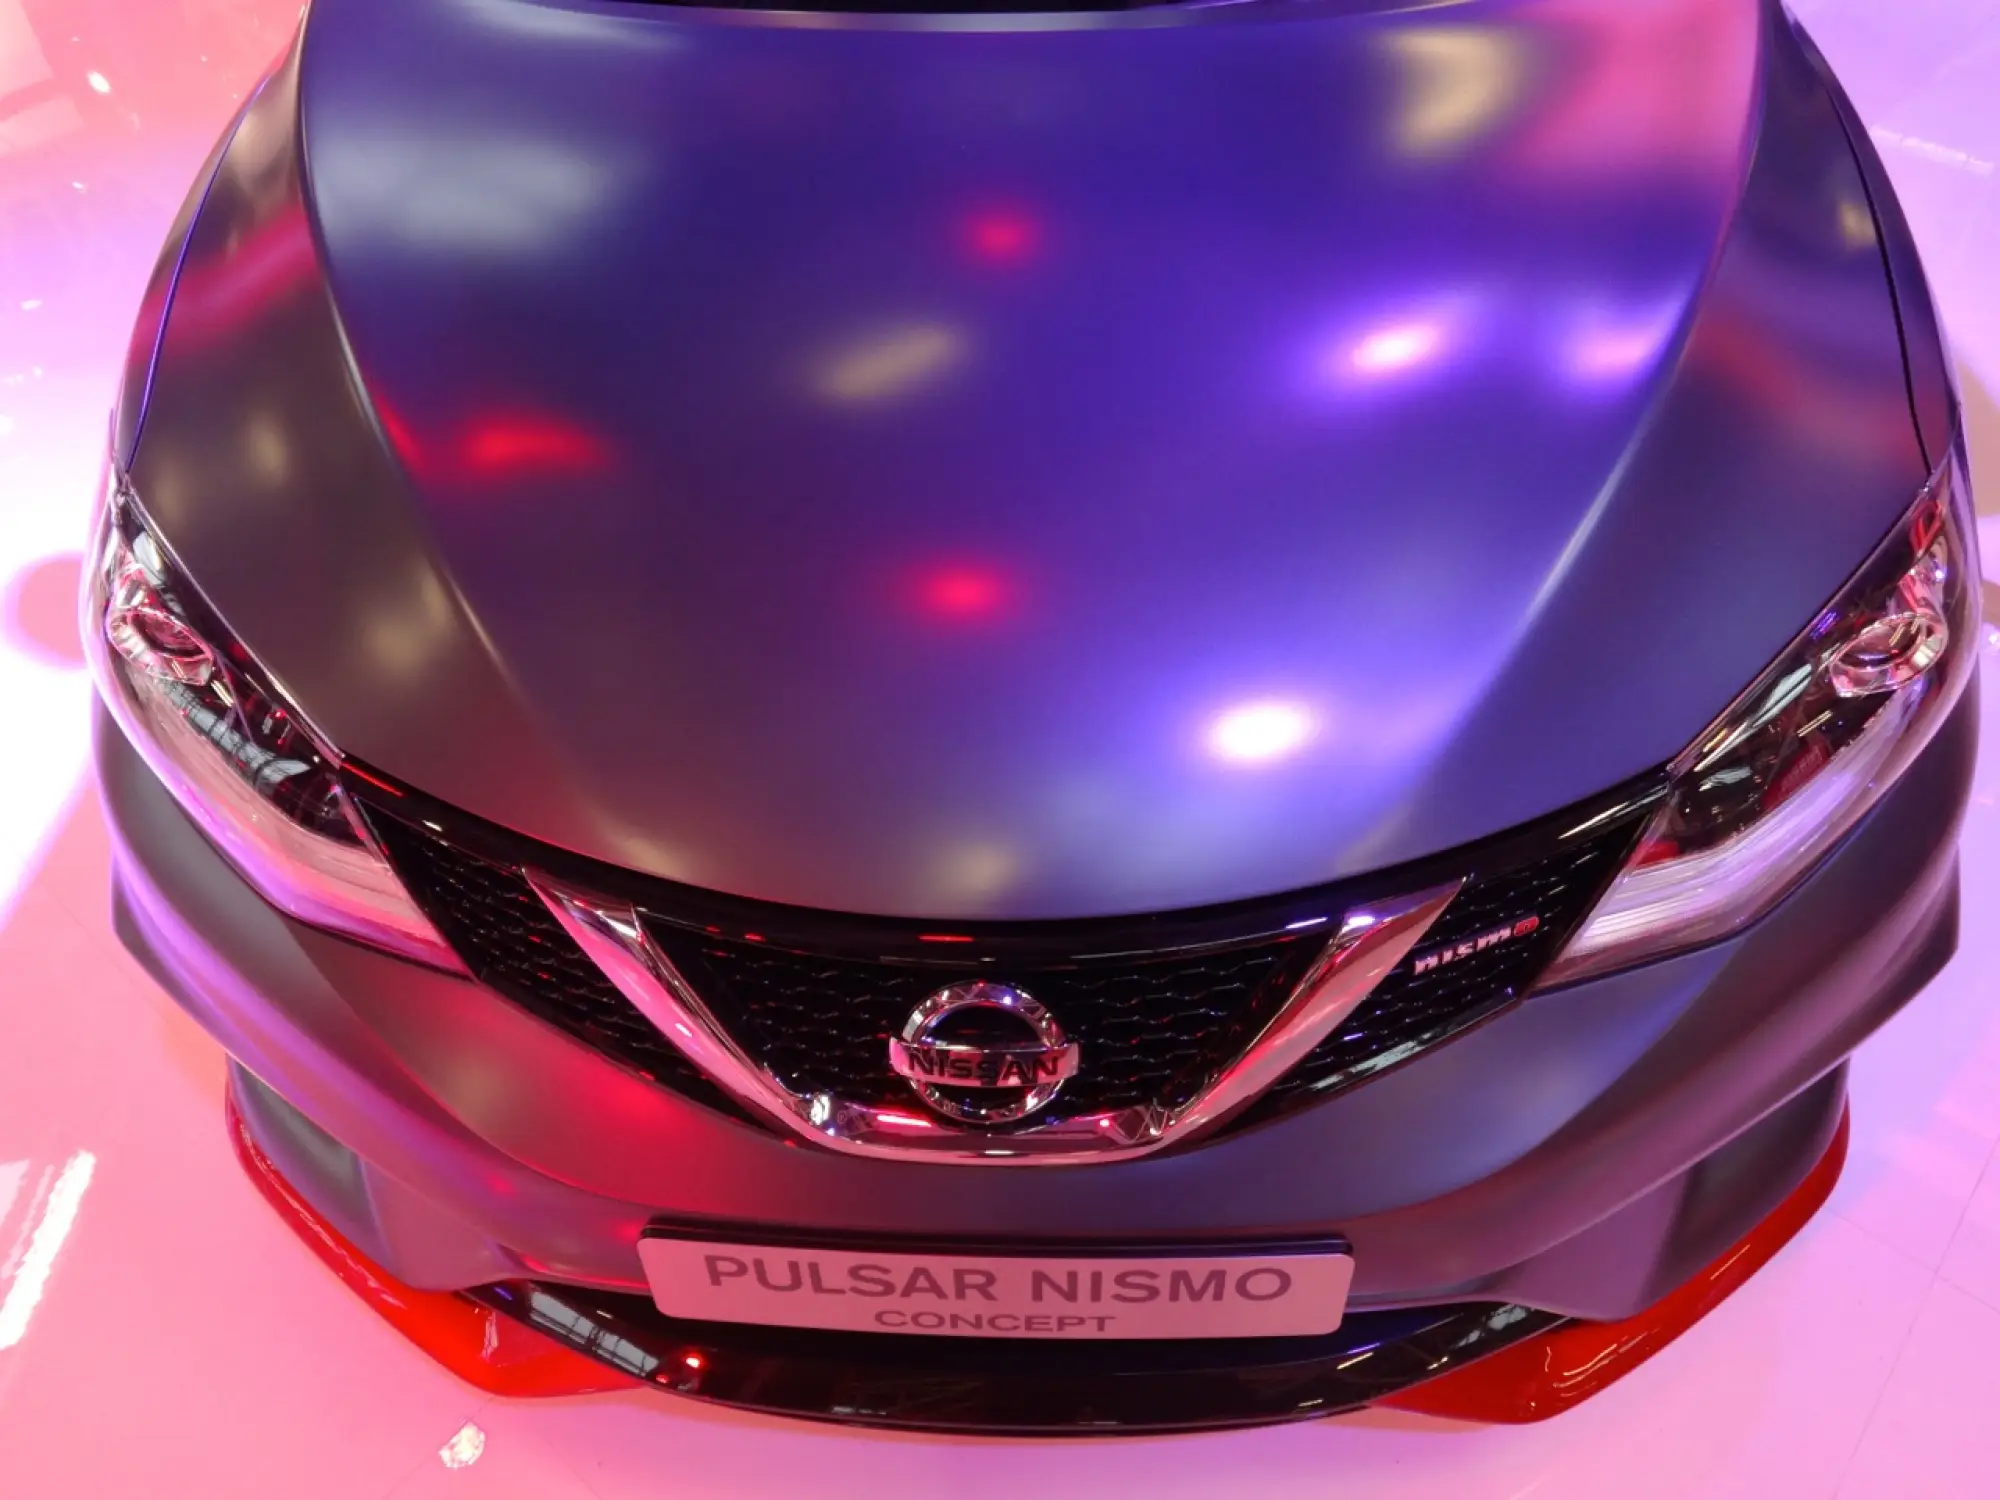 Nissan Pulsar Nismo - Motor Show 2014 - 15